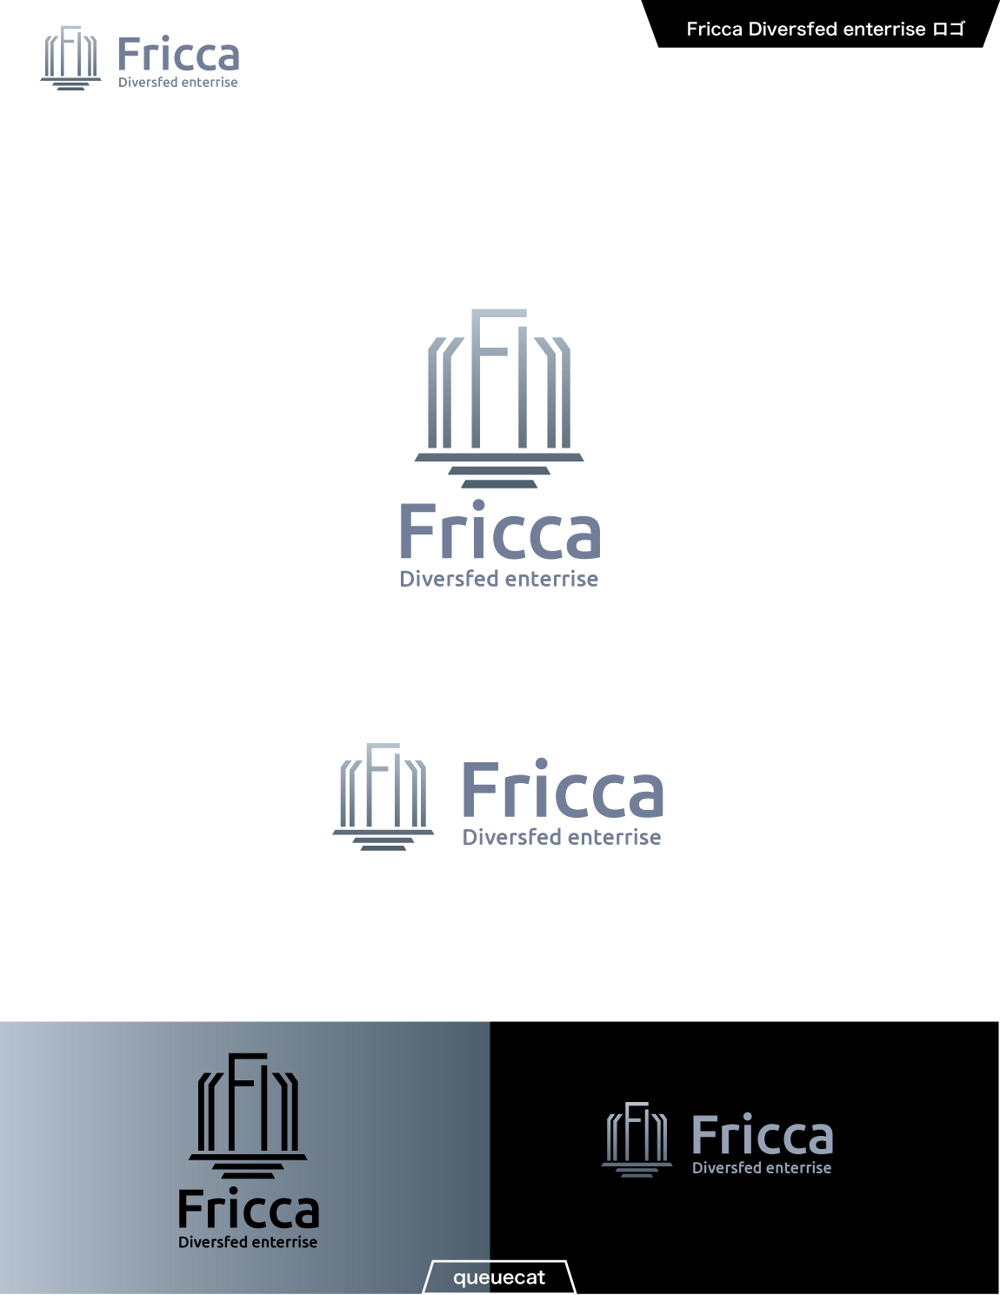 Fricca1_1.jpg